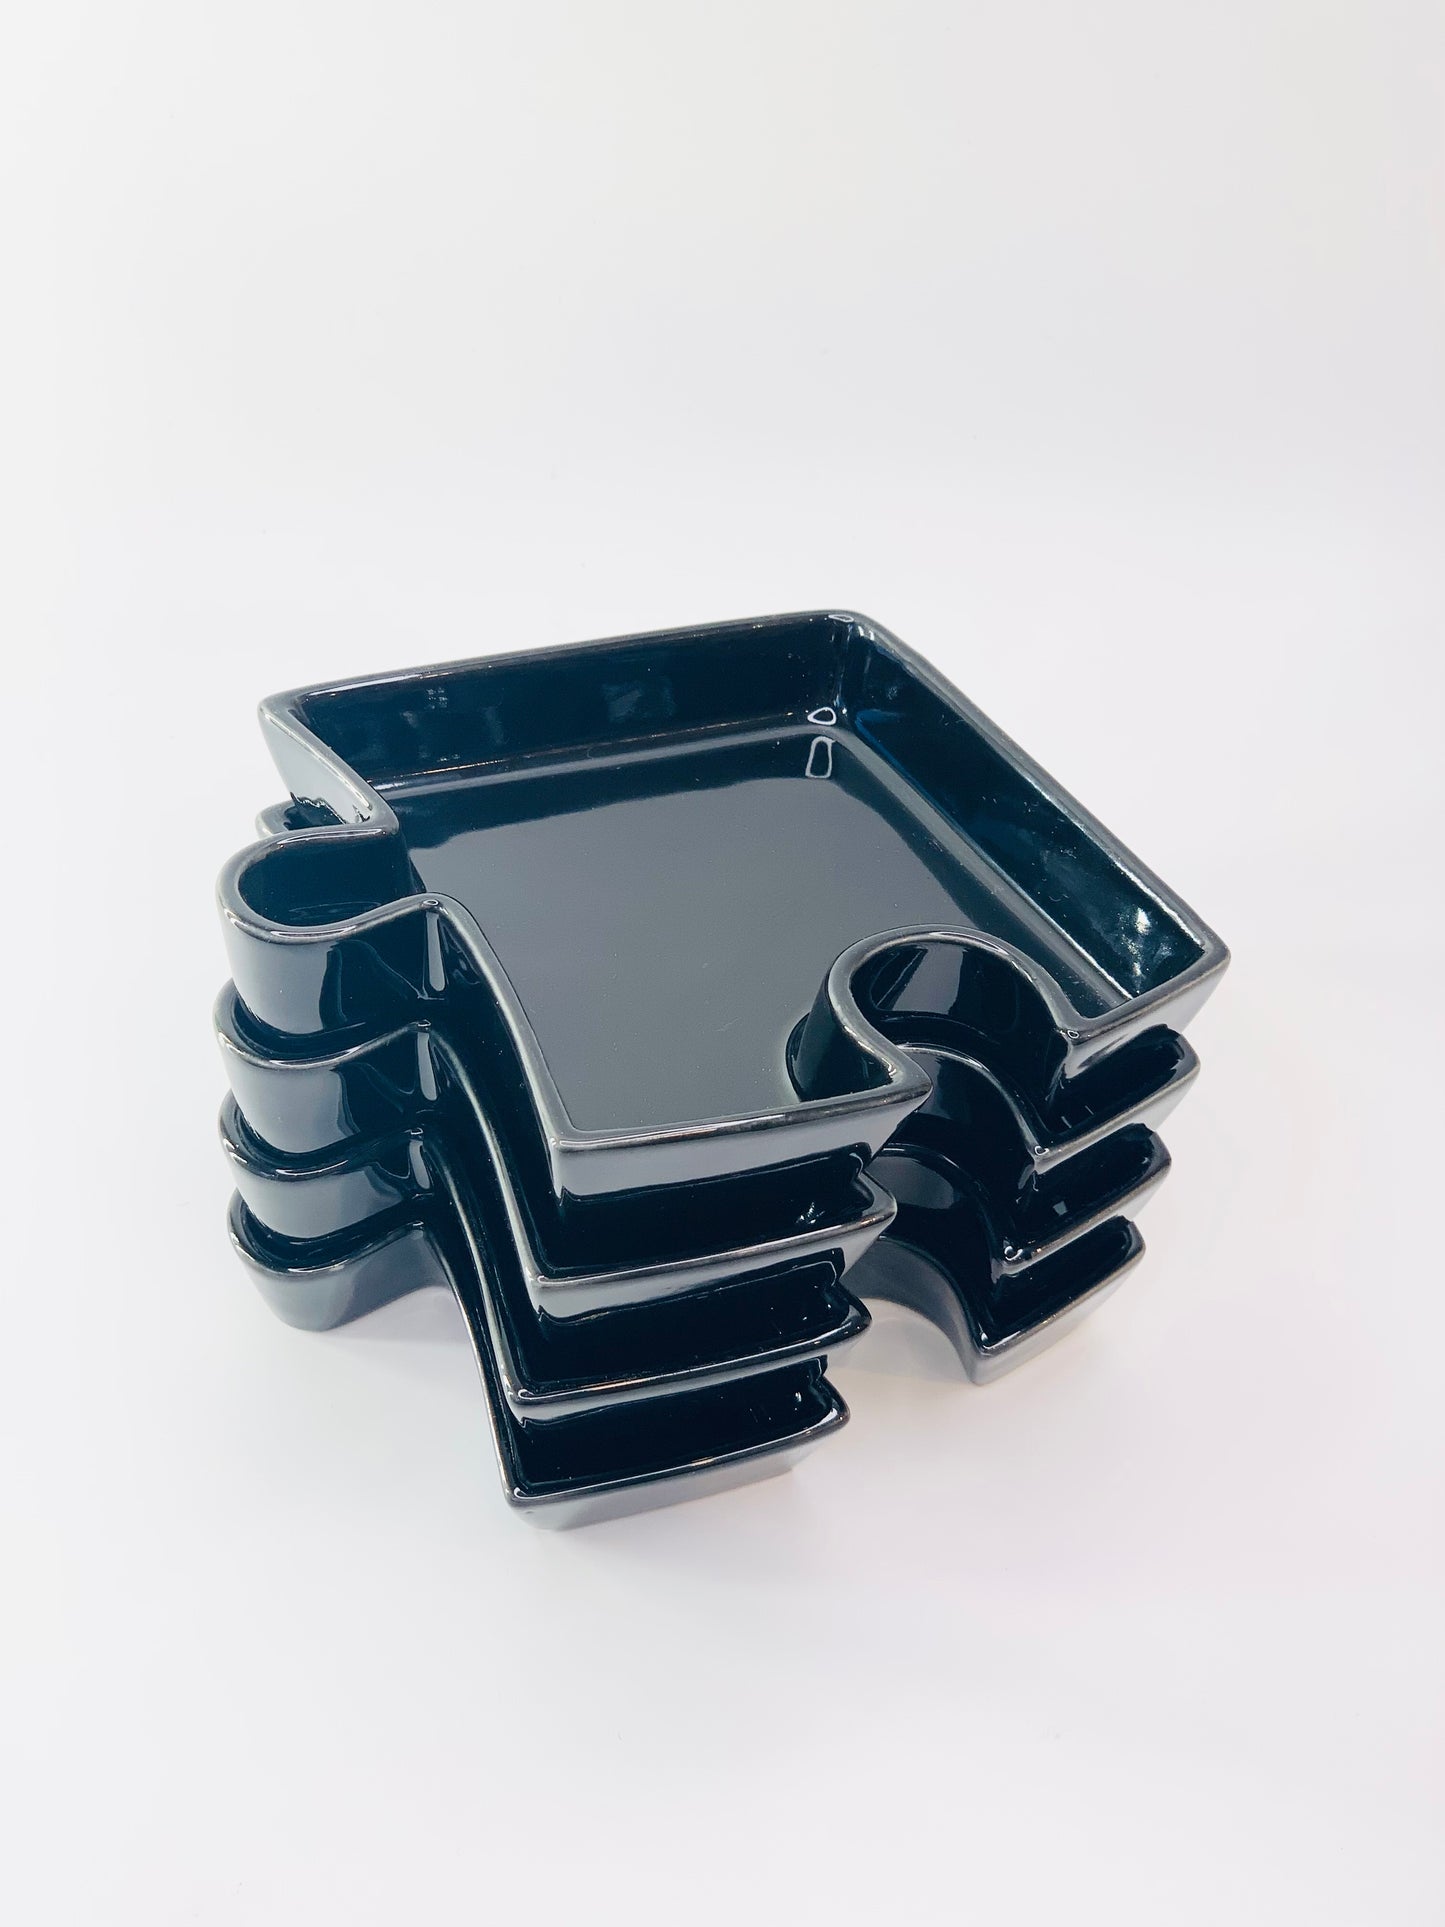 Retro porcelain serving platter, made of composite stackable plates